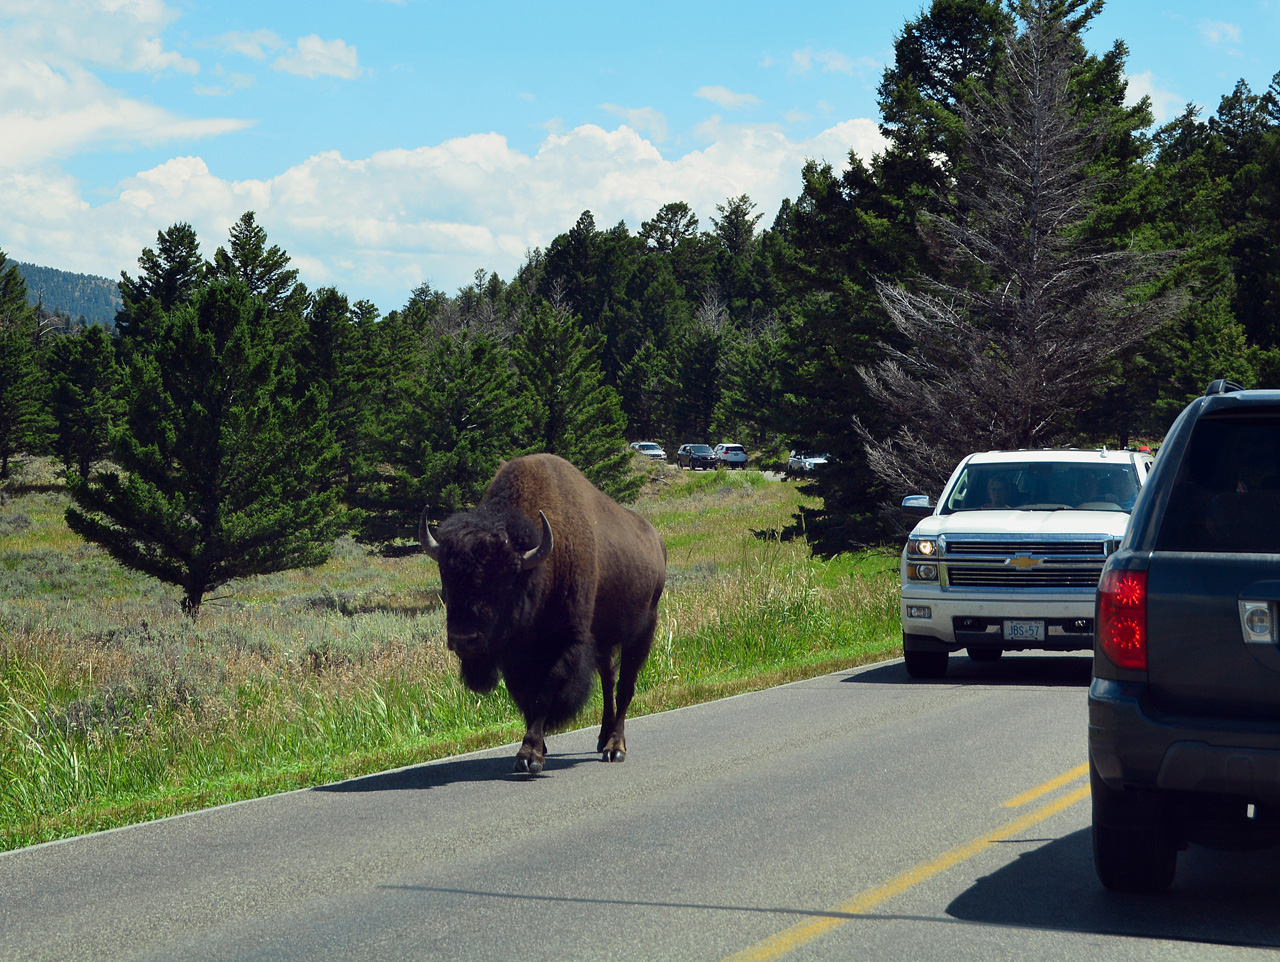 2015-07-26, 067, Yellowstone NP, WY, Buffalo on Road